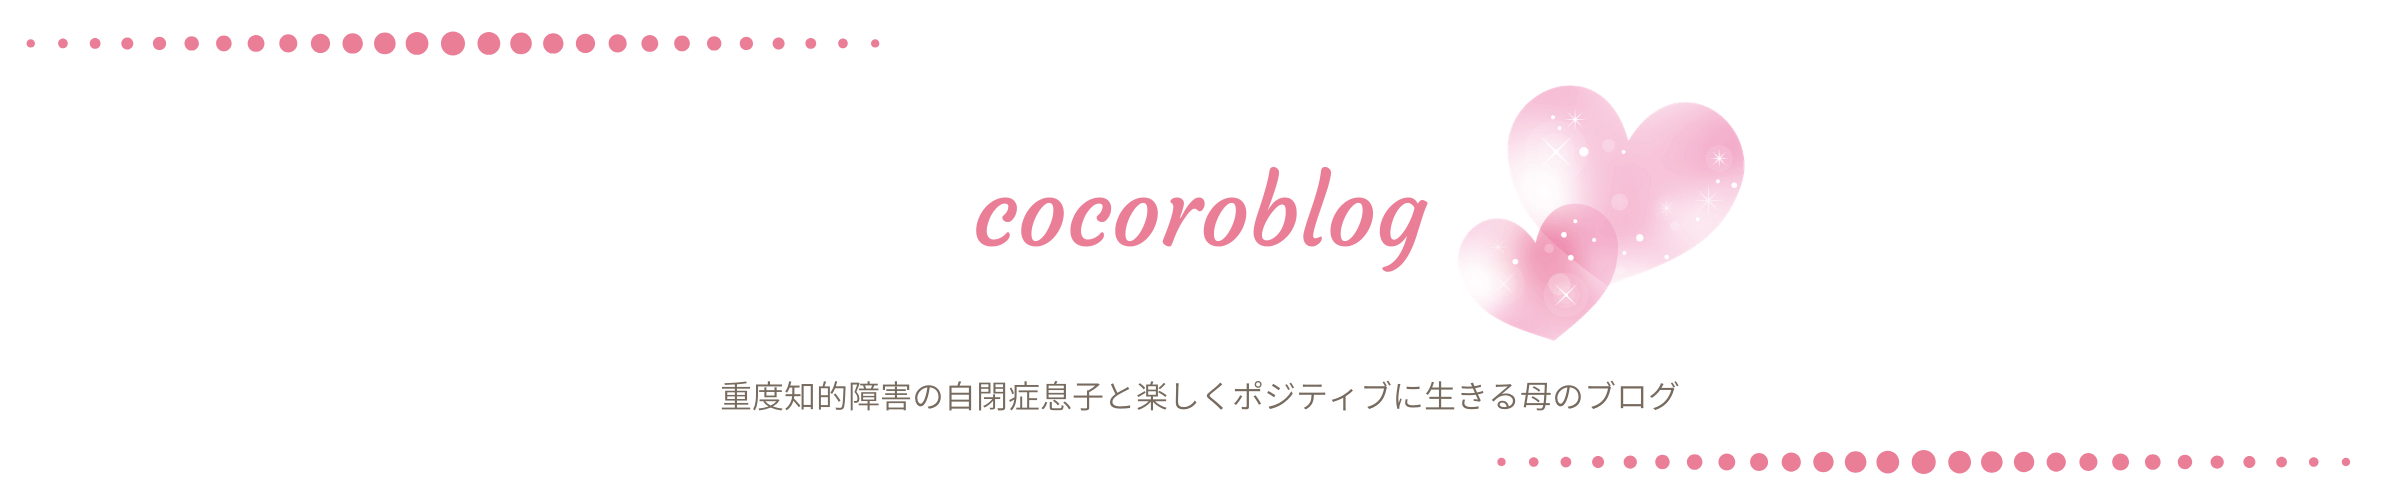 cocoroblog (1)